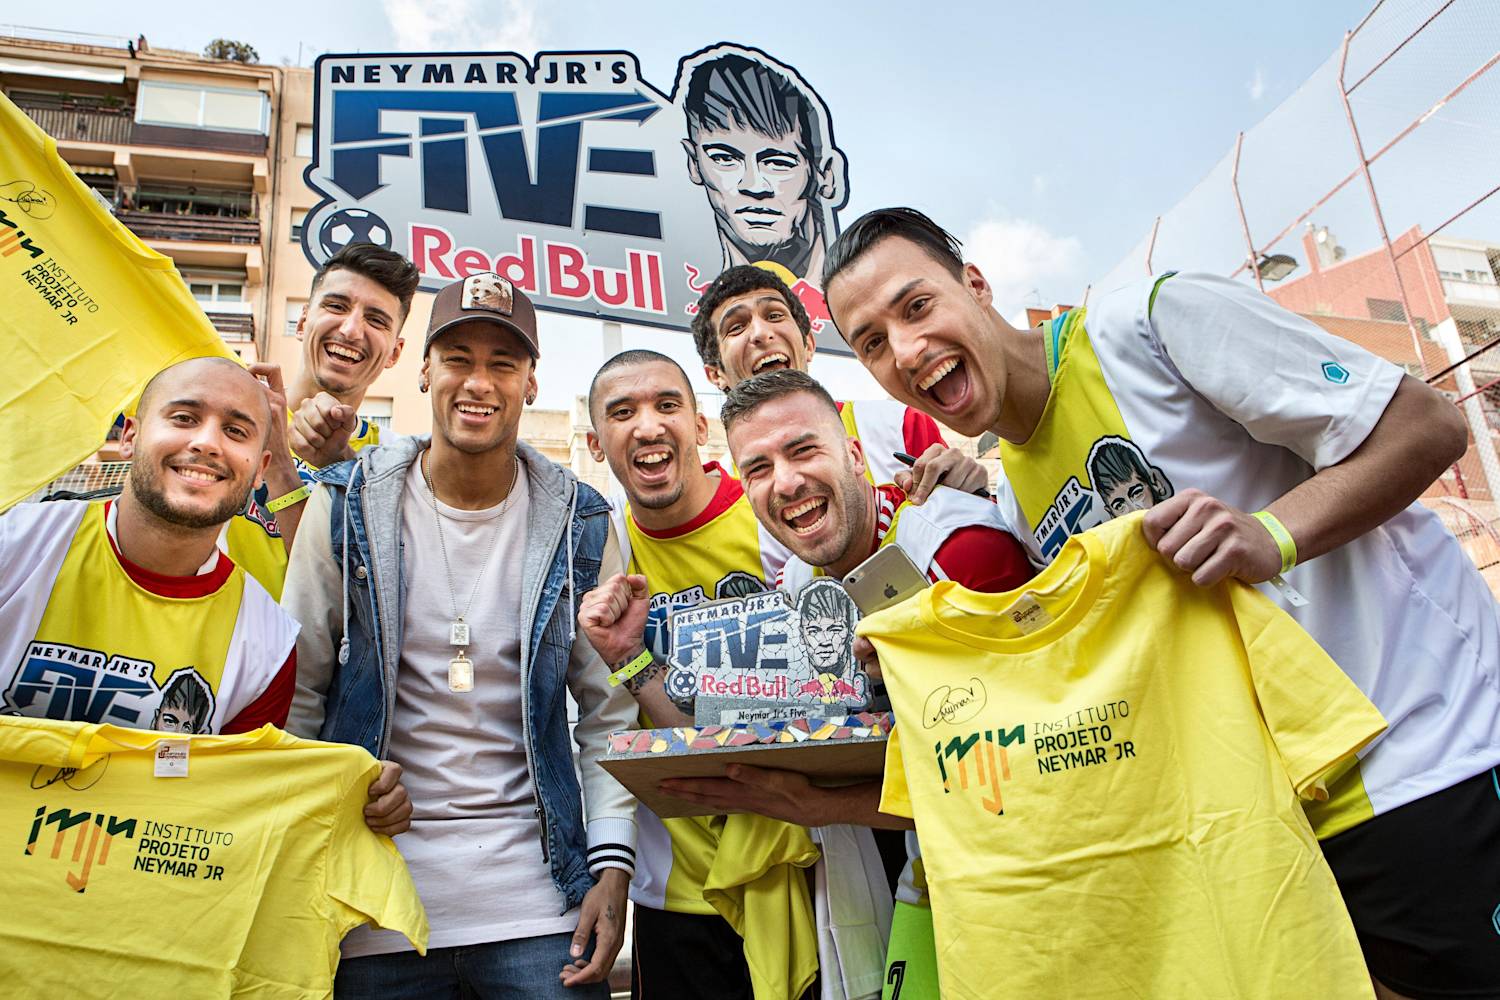 Neymar Jr's Five Watch World Final trailer Red Bull